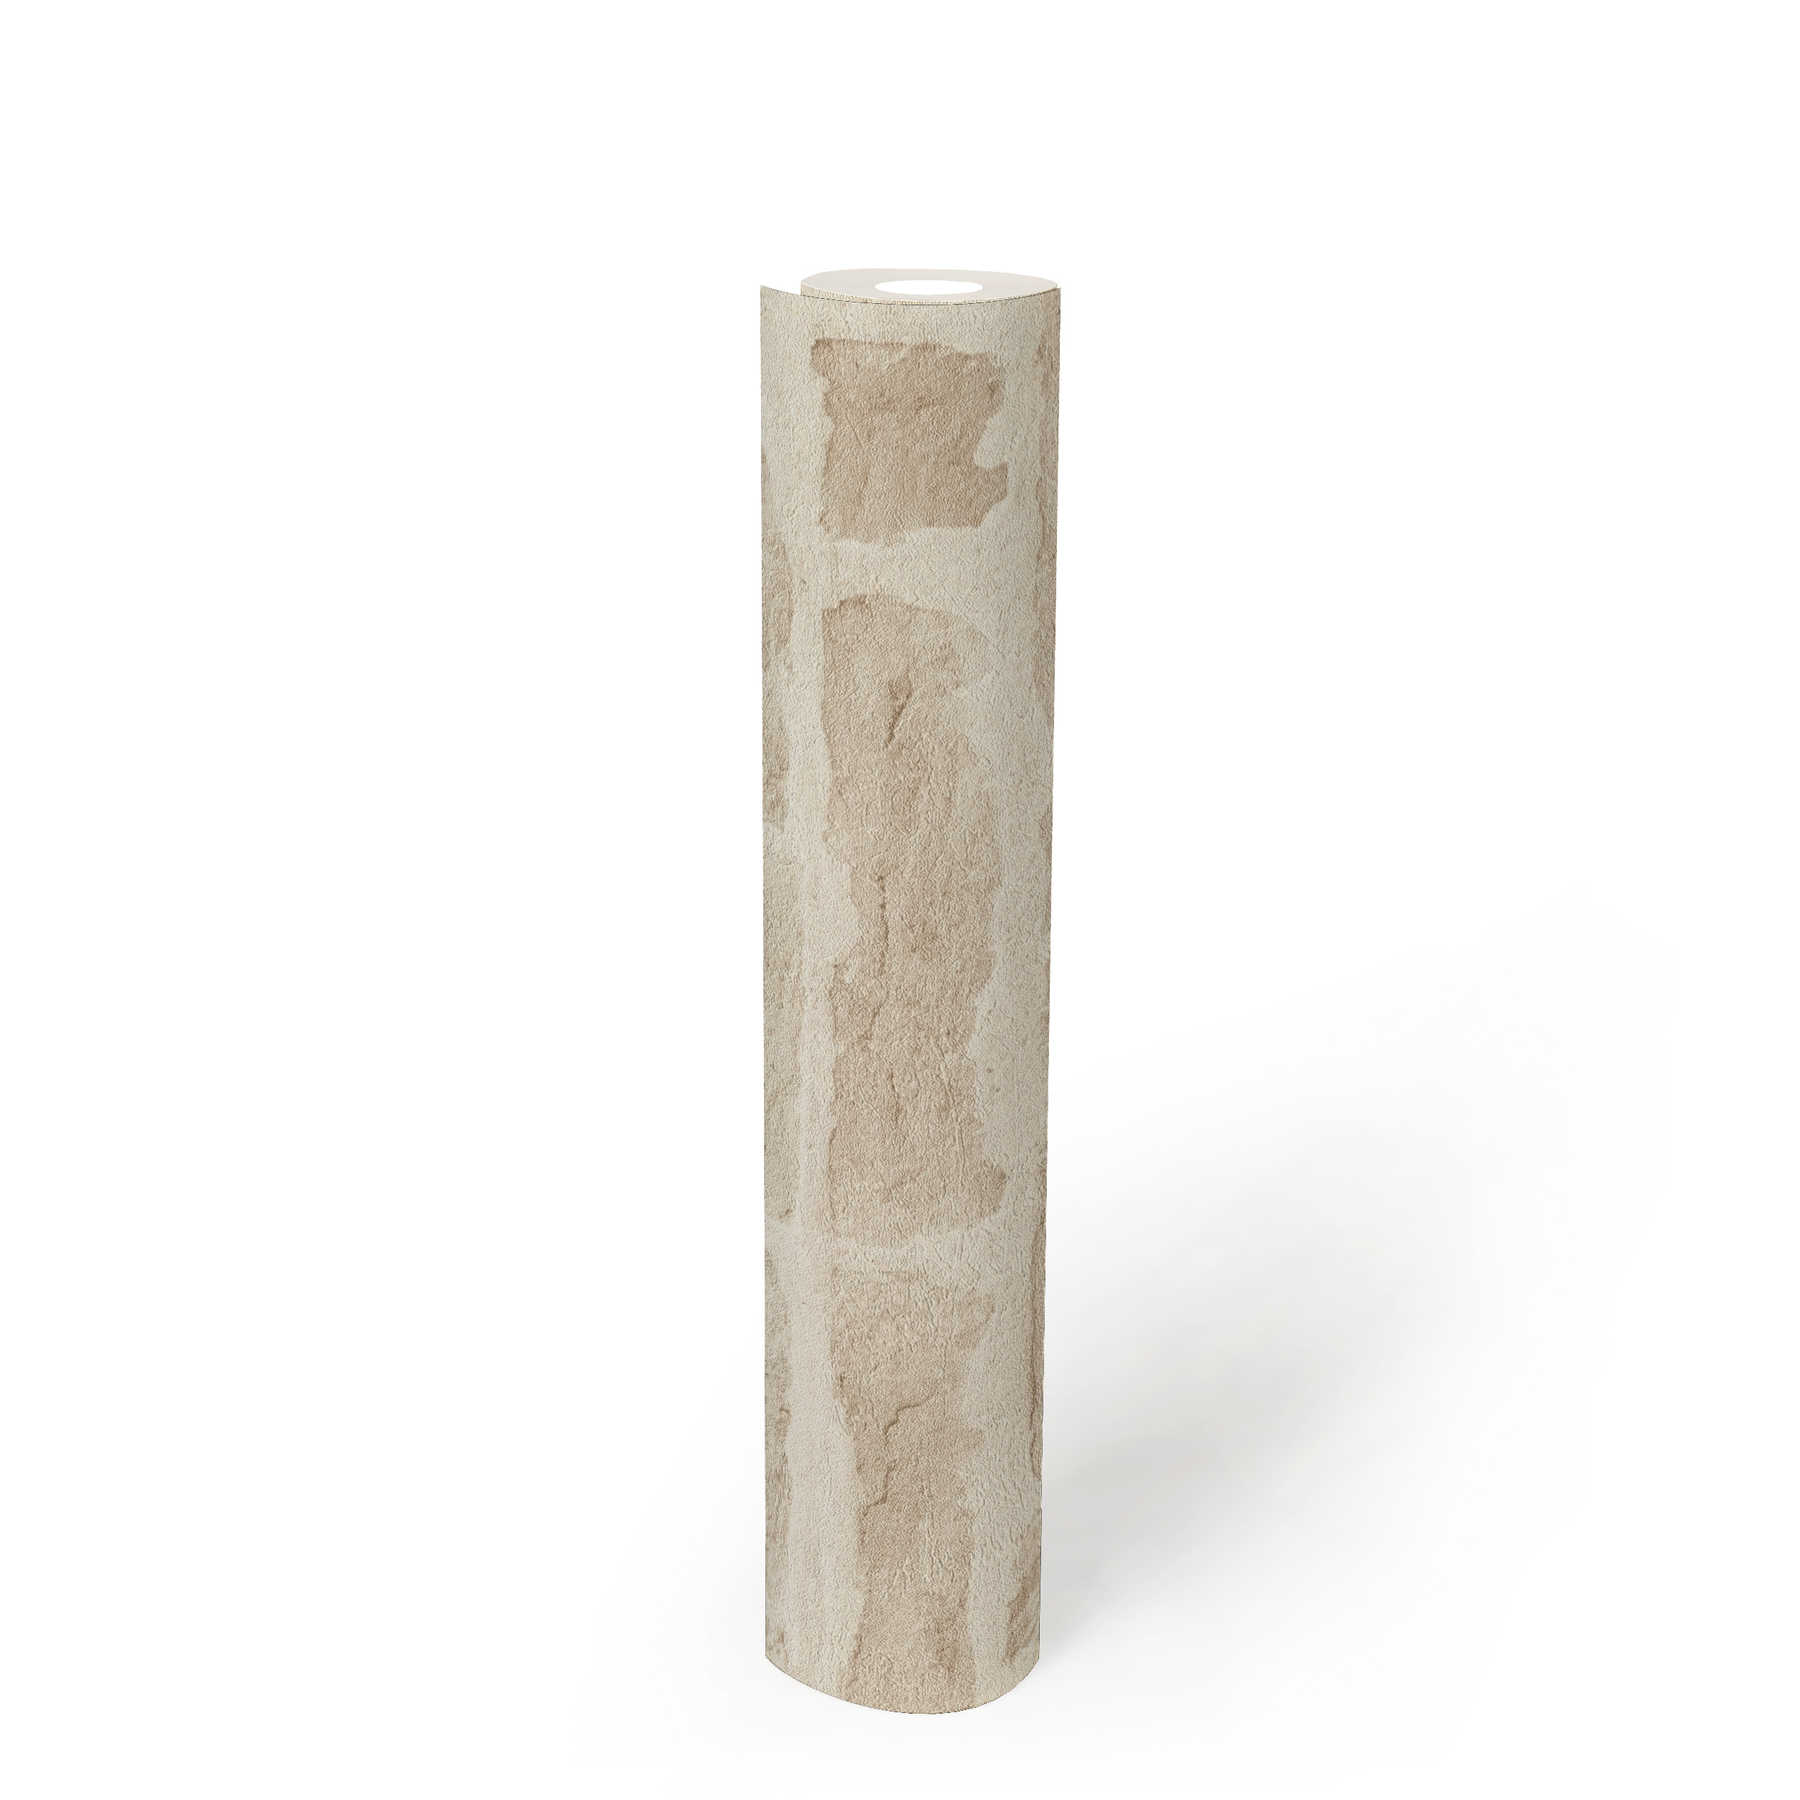             Light non-woven wallpaper natural stone with wall design - beige, cream
        